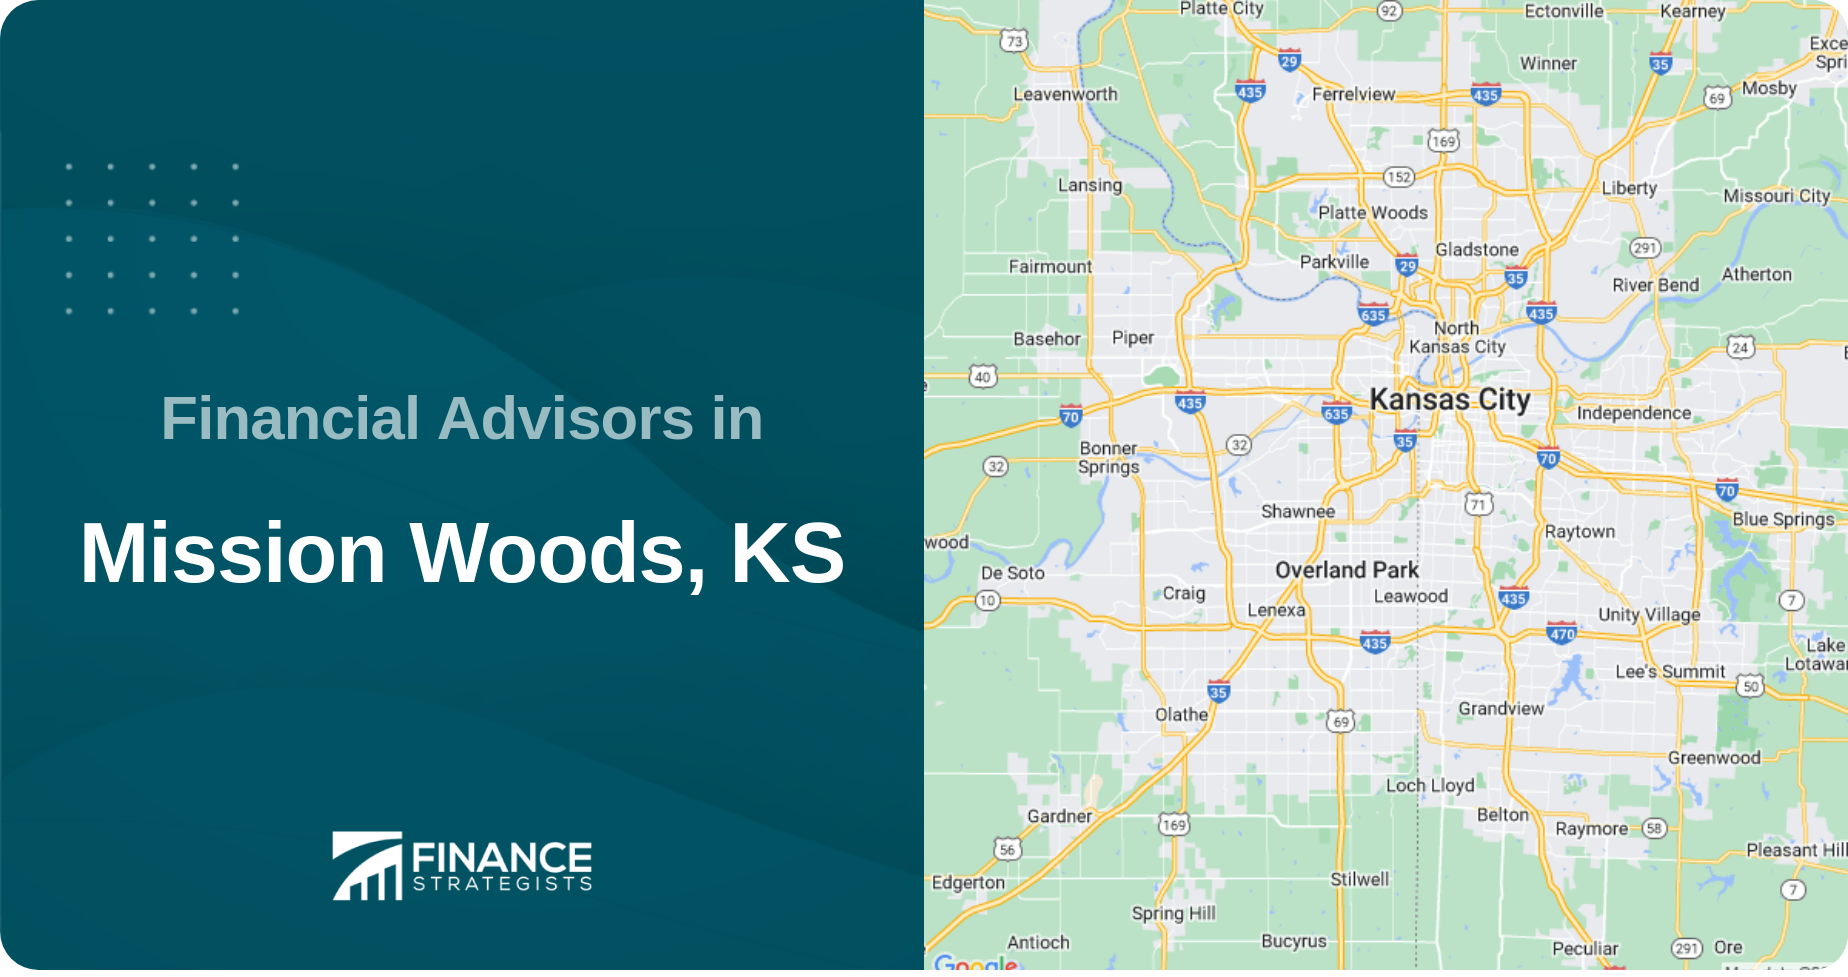 Financial Advisors in Mission Woods, KS